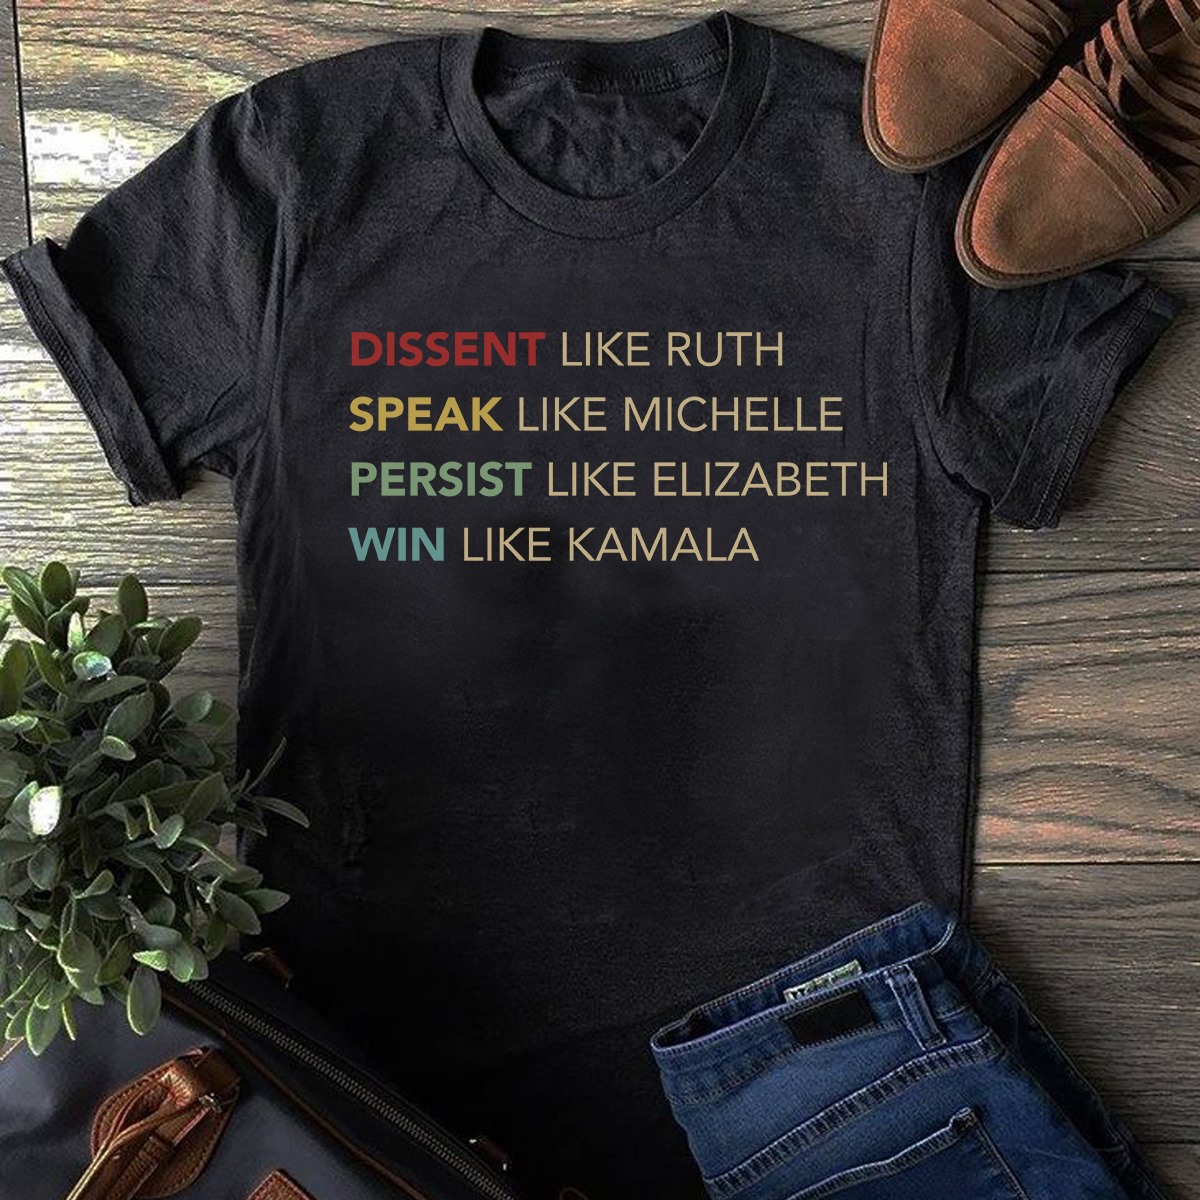 Dissent like Ruth, speak like Michelle, persist like Elizabeth, win like Kamala